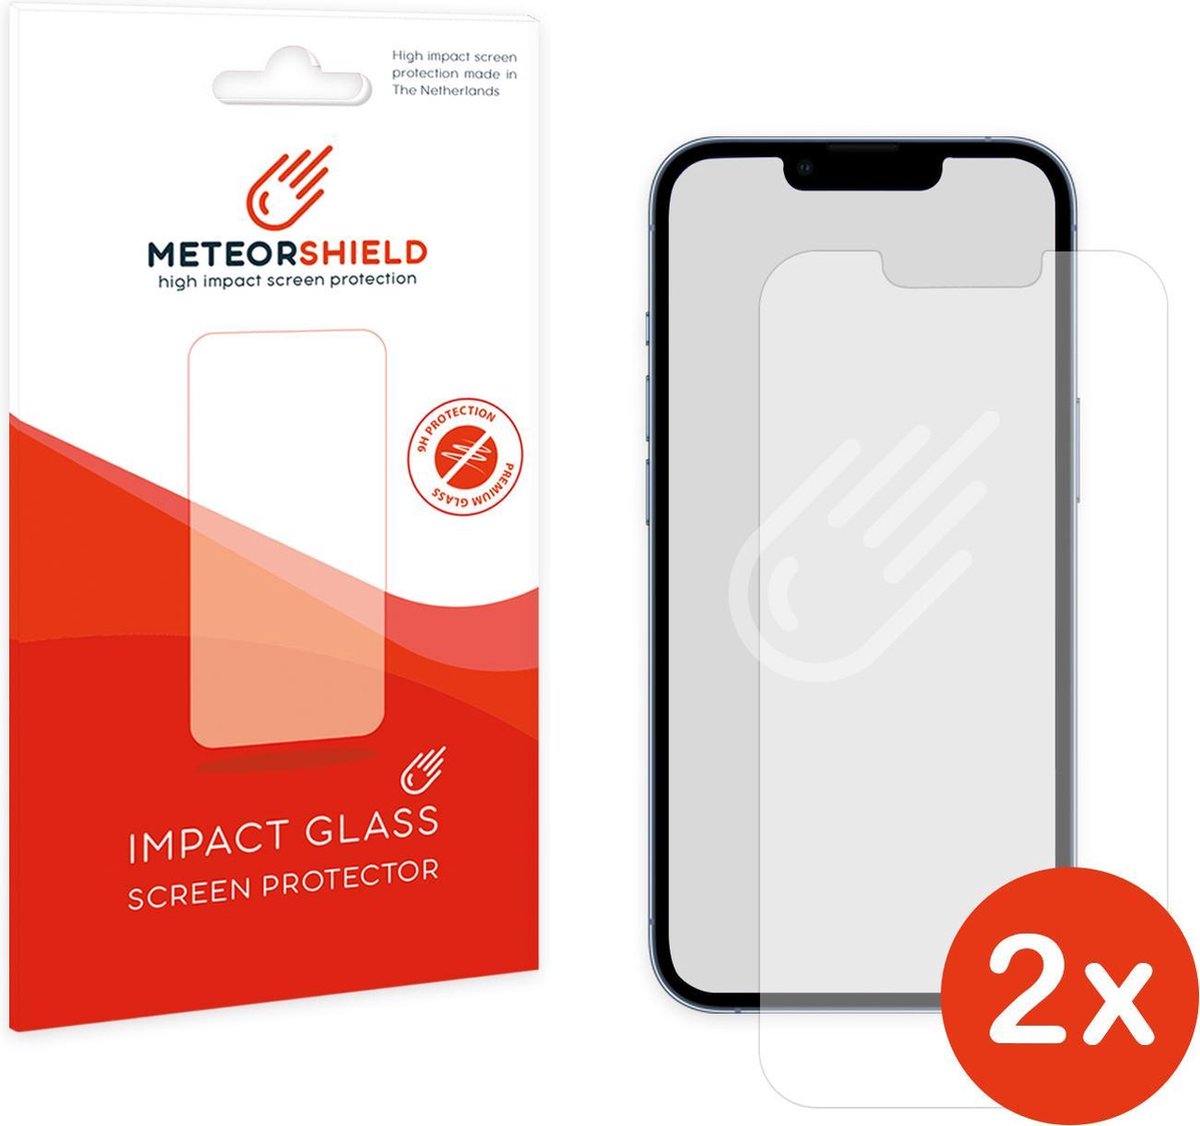 2 stuks: Meteorshield iPhone 13 Pro screenprotector - Ultra clear impact glass